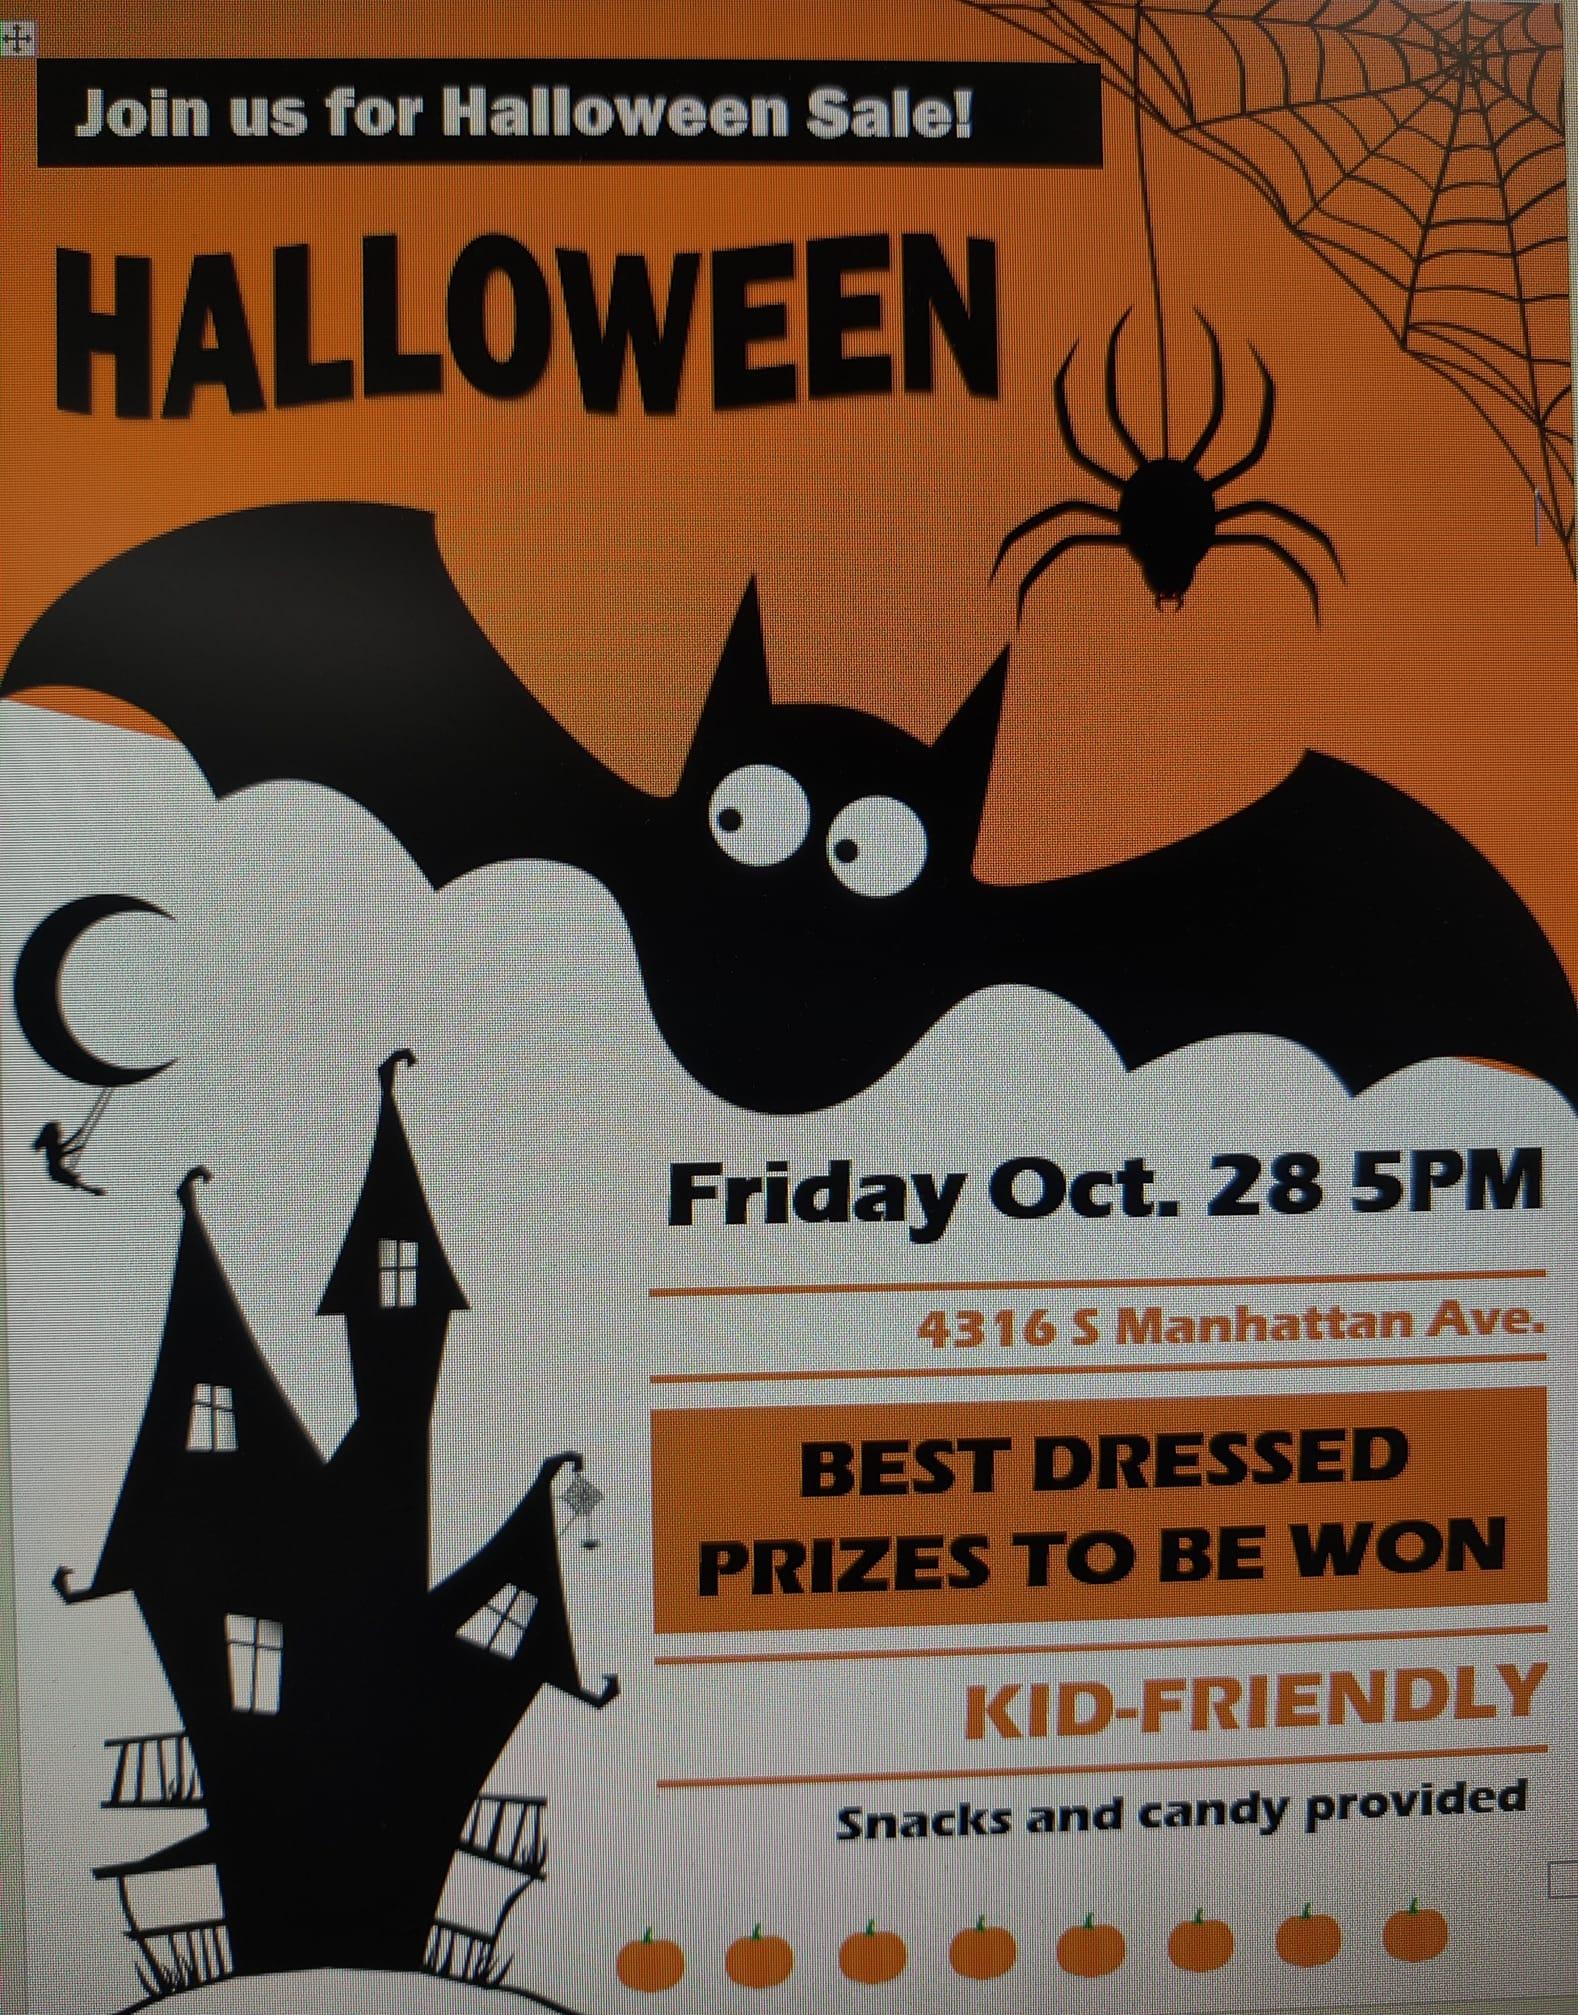 Halloween Sale and Fun
Fri Oct 28, 5:00 PM - Fri Oct 28, 11:30 PM
in 8 days